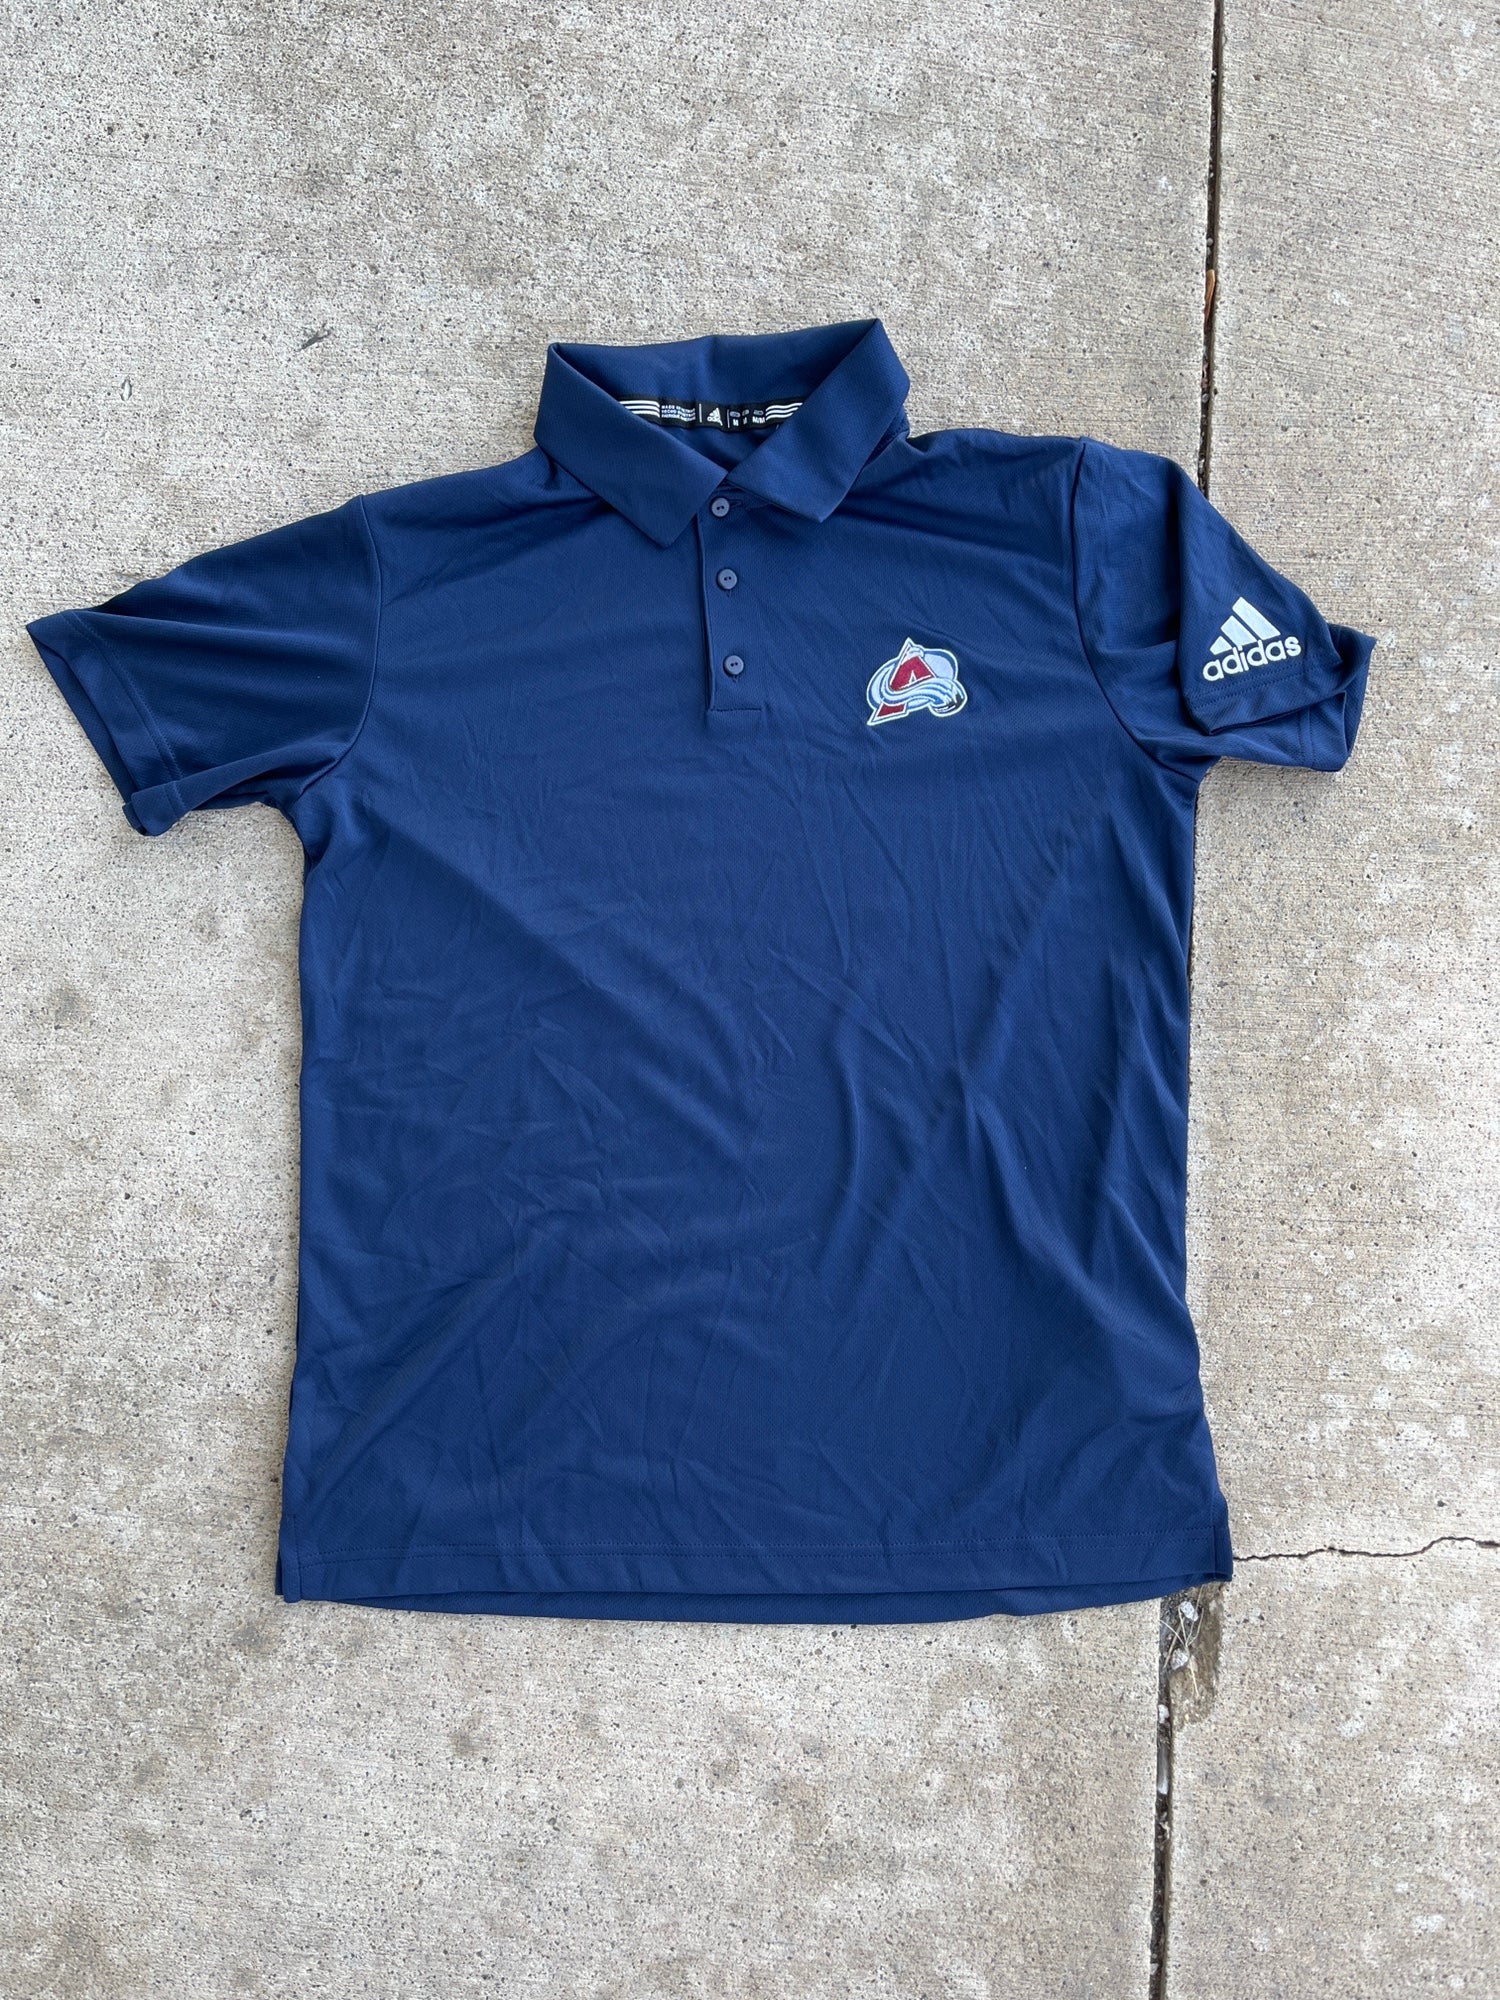 New ADIDAS NHL Colorado Avalanche Team Issued Golf Polo Shirt (s, m, xxl)